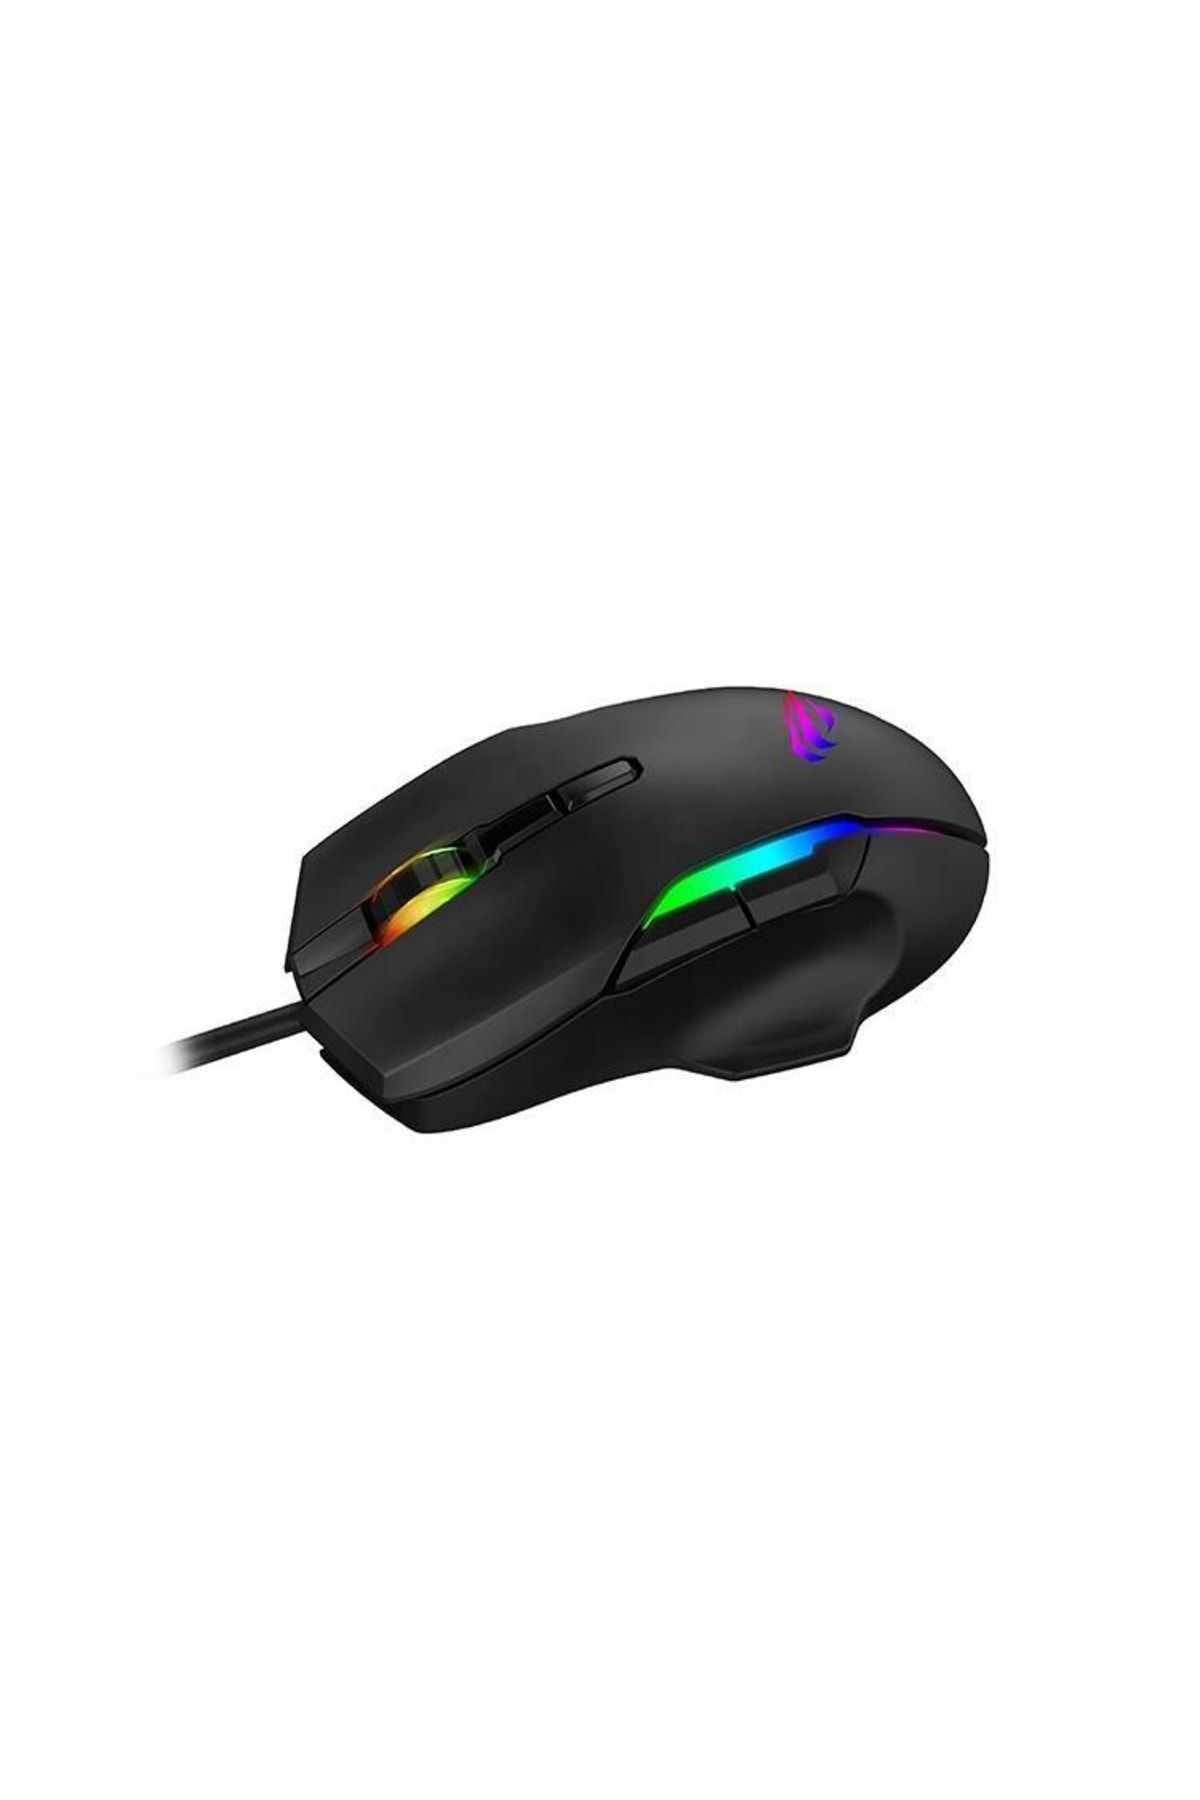 Мышки для телевизоров lg. Havit HV-ms1012a. Havit RGB Backlit Gaming Mouse ms1026. Мышка для телевизора. HV-ms300 Gaming Mouse.